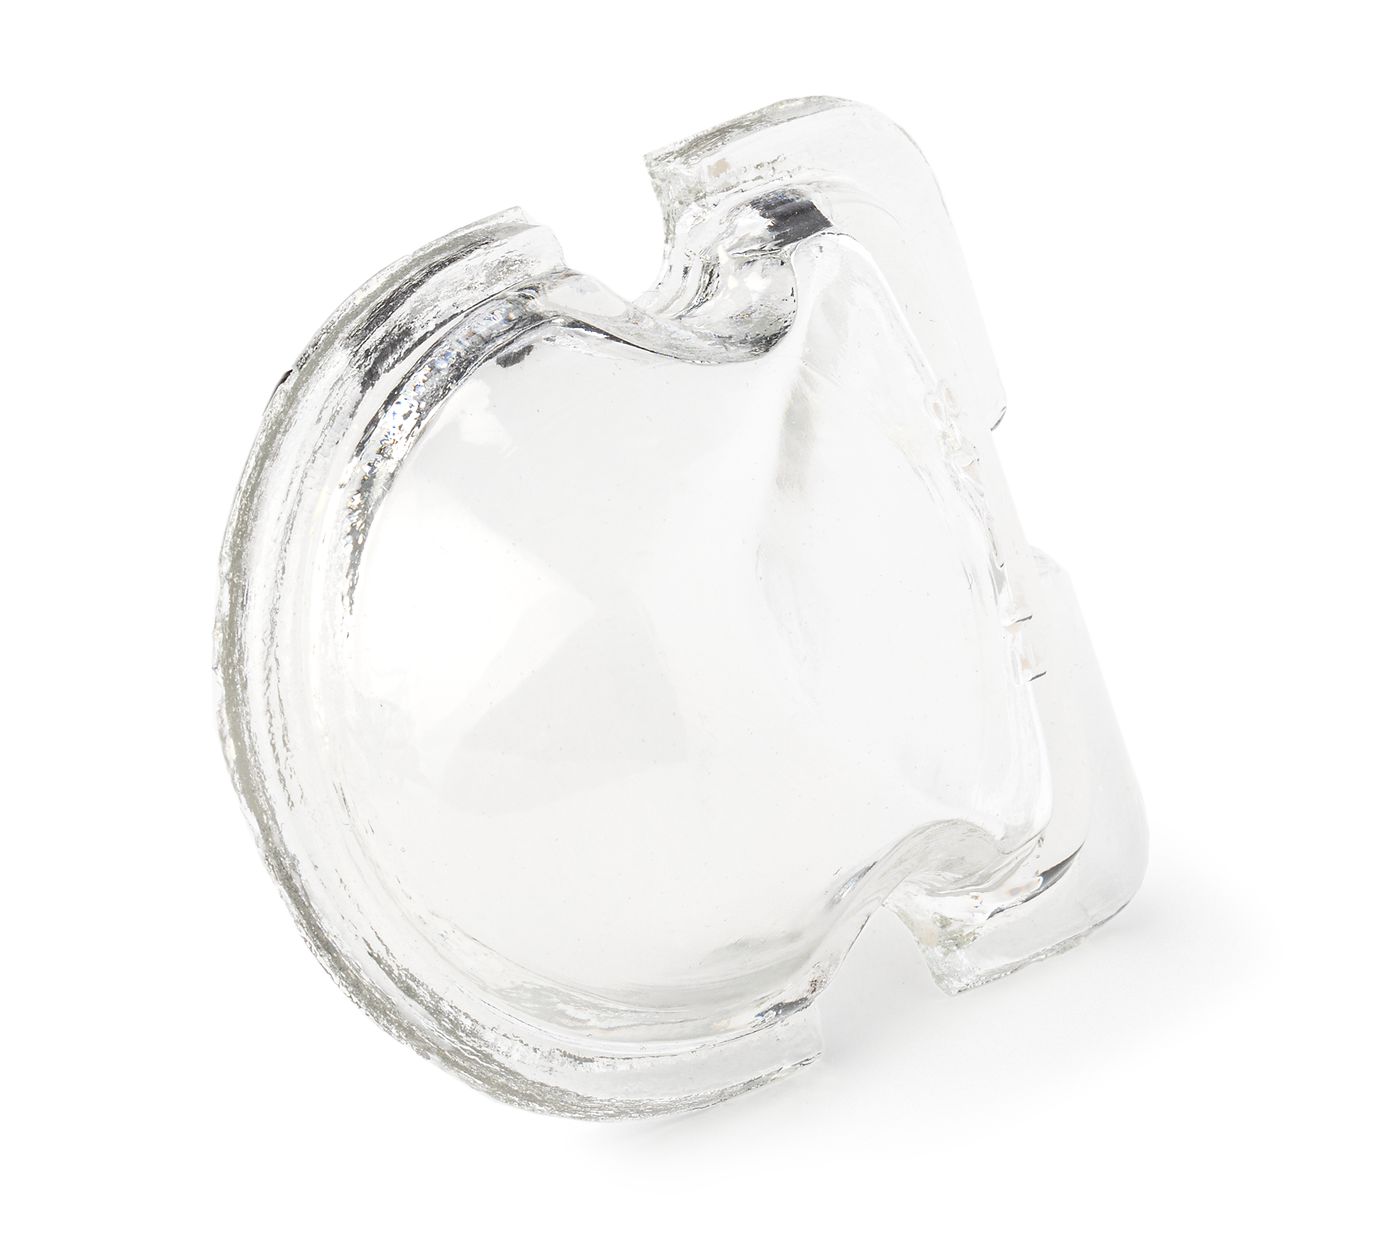 Streuscheibe
Glass
Diffuseur
Cristal de cubierto